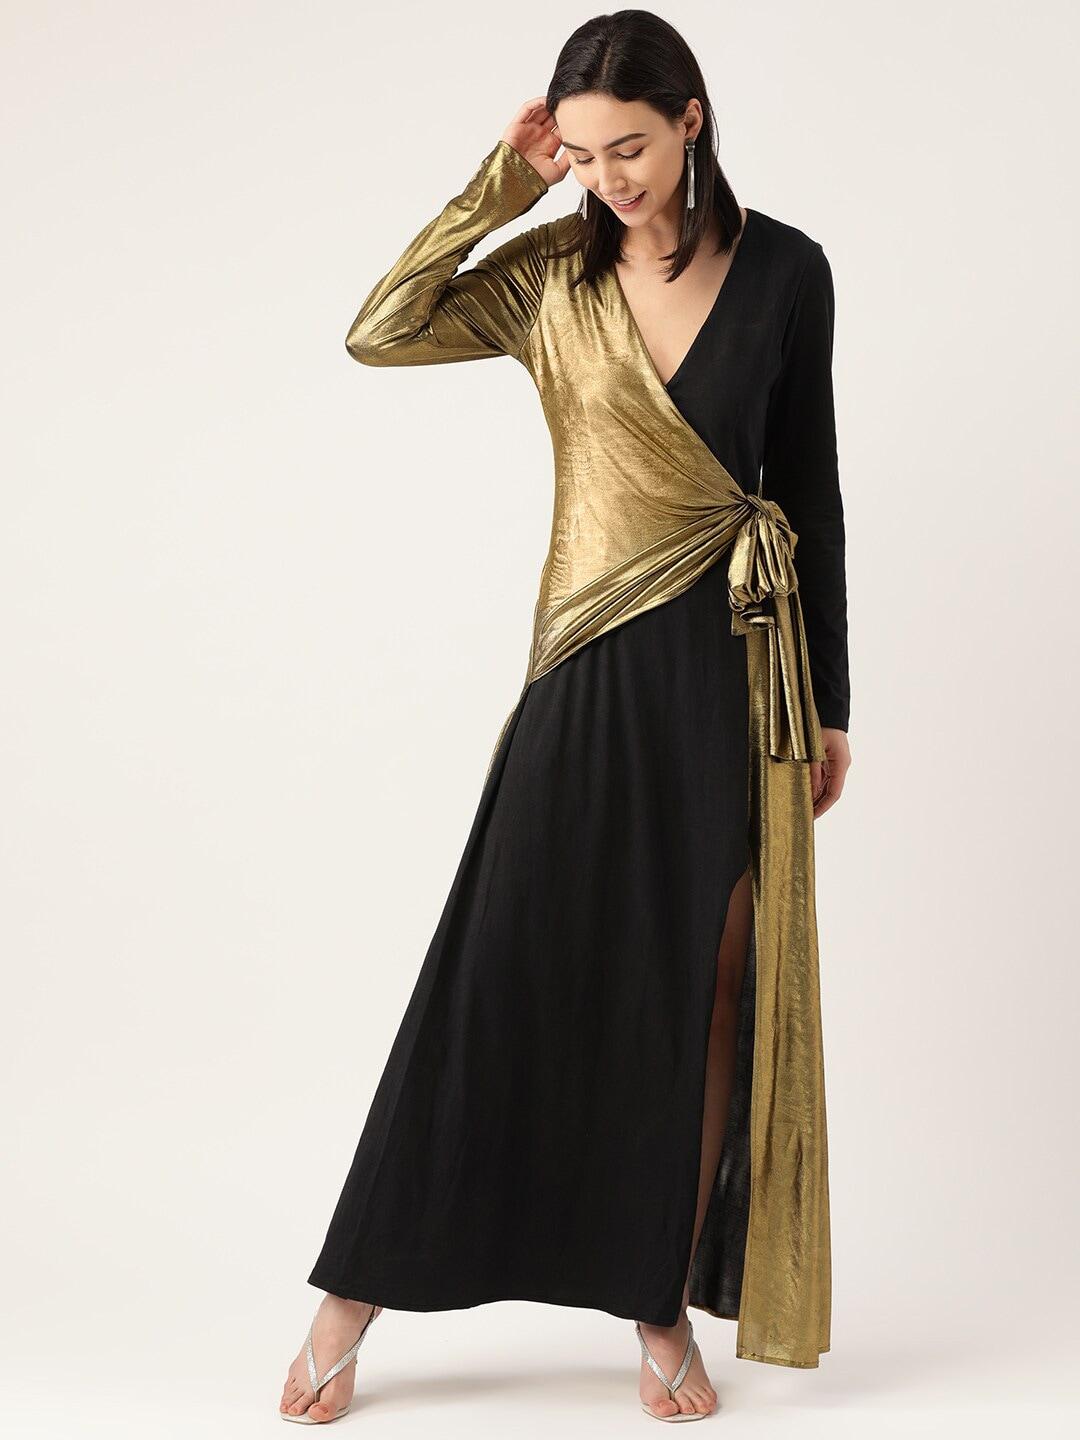 dodo-&-moa-women-gold-&-black-solid-wrap-dress